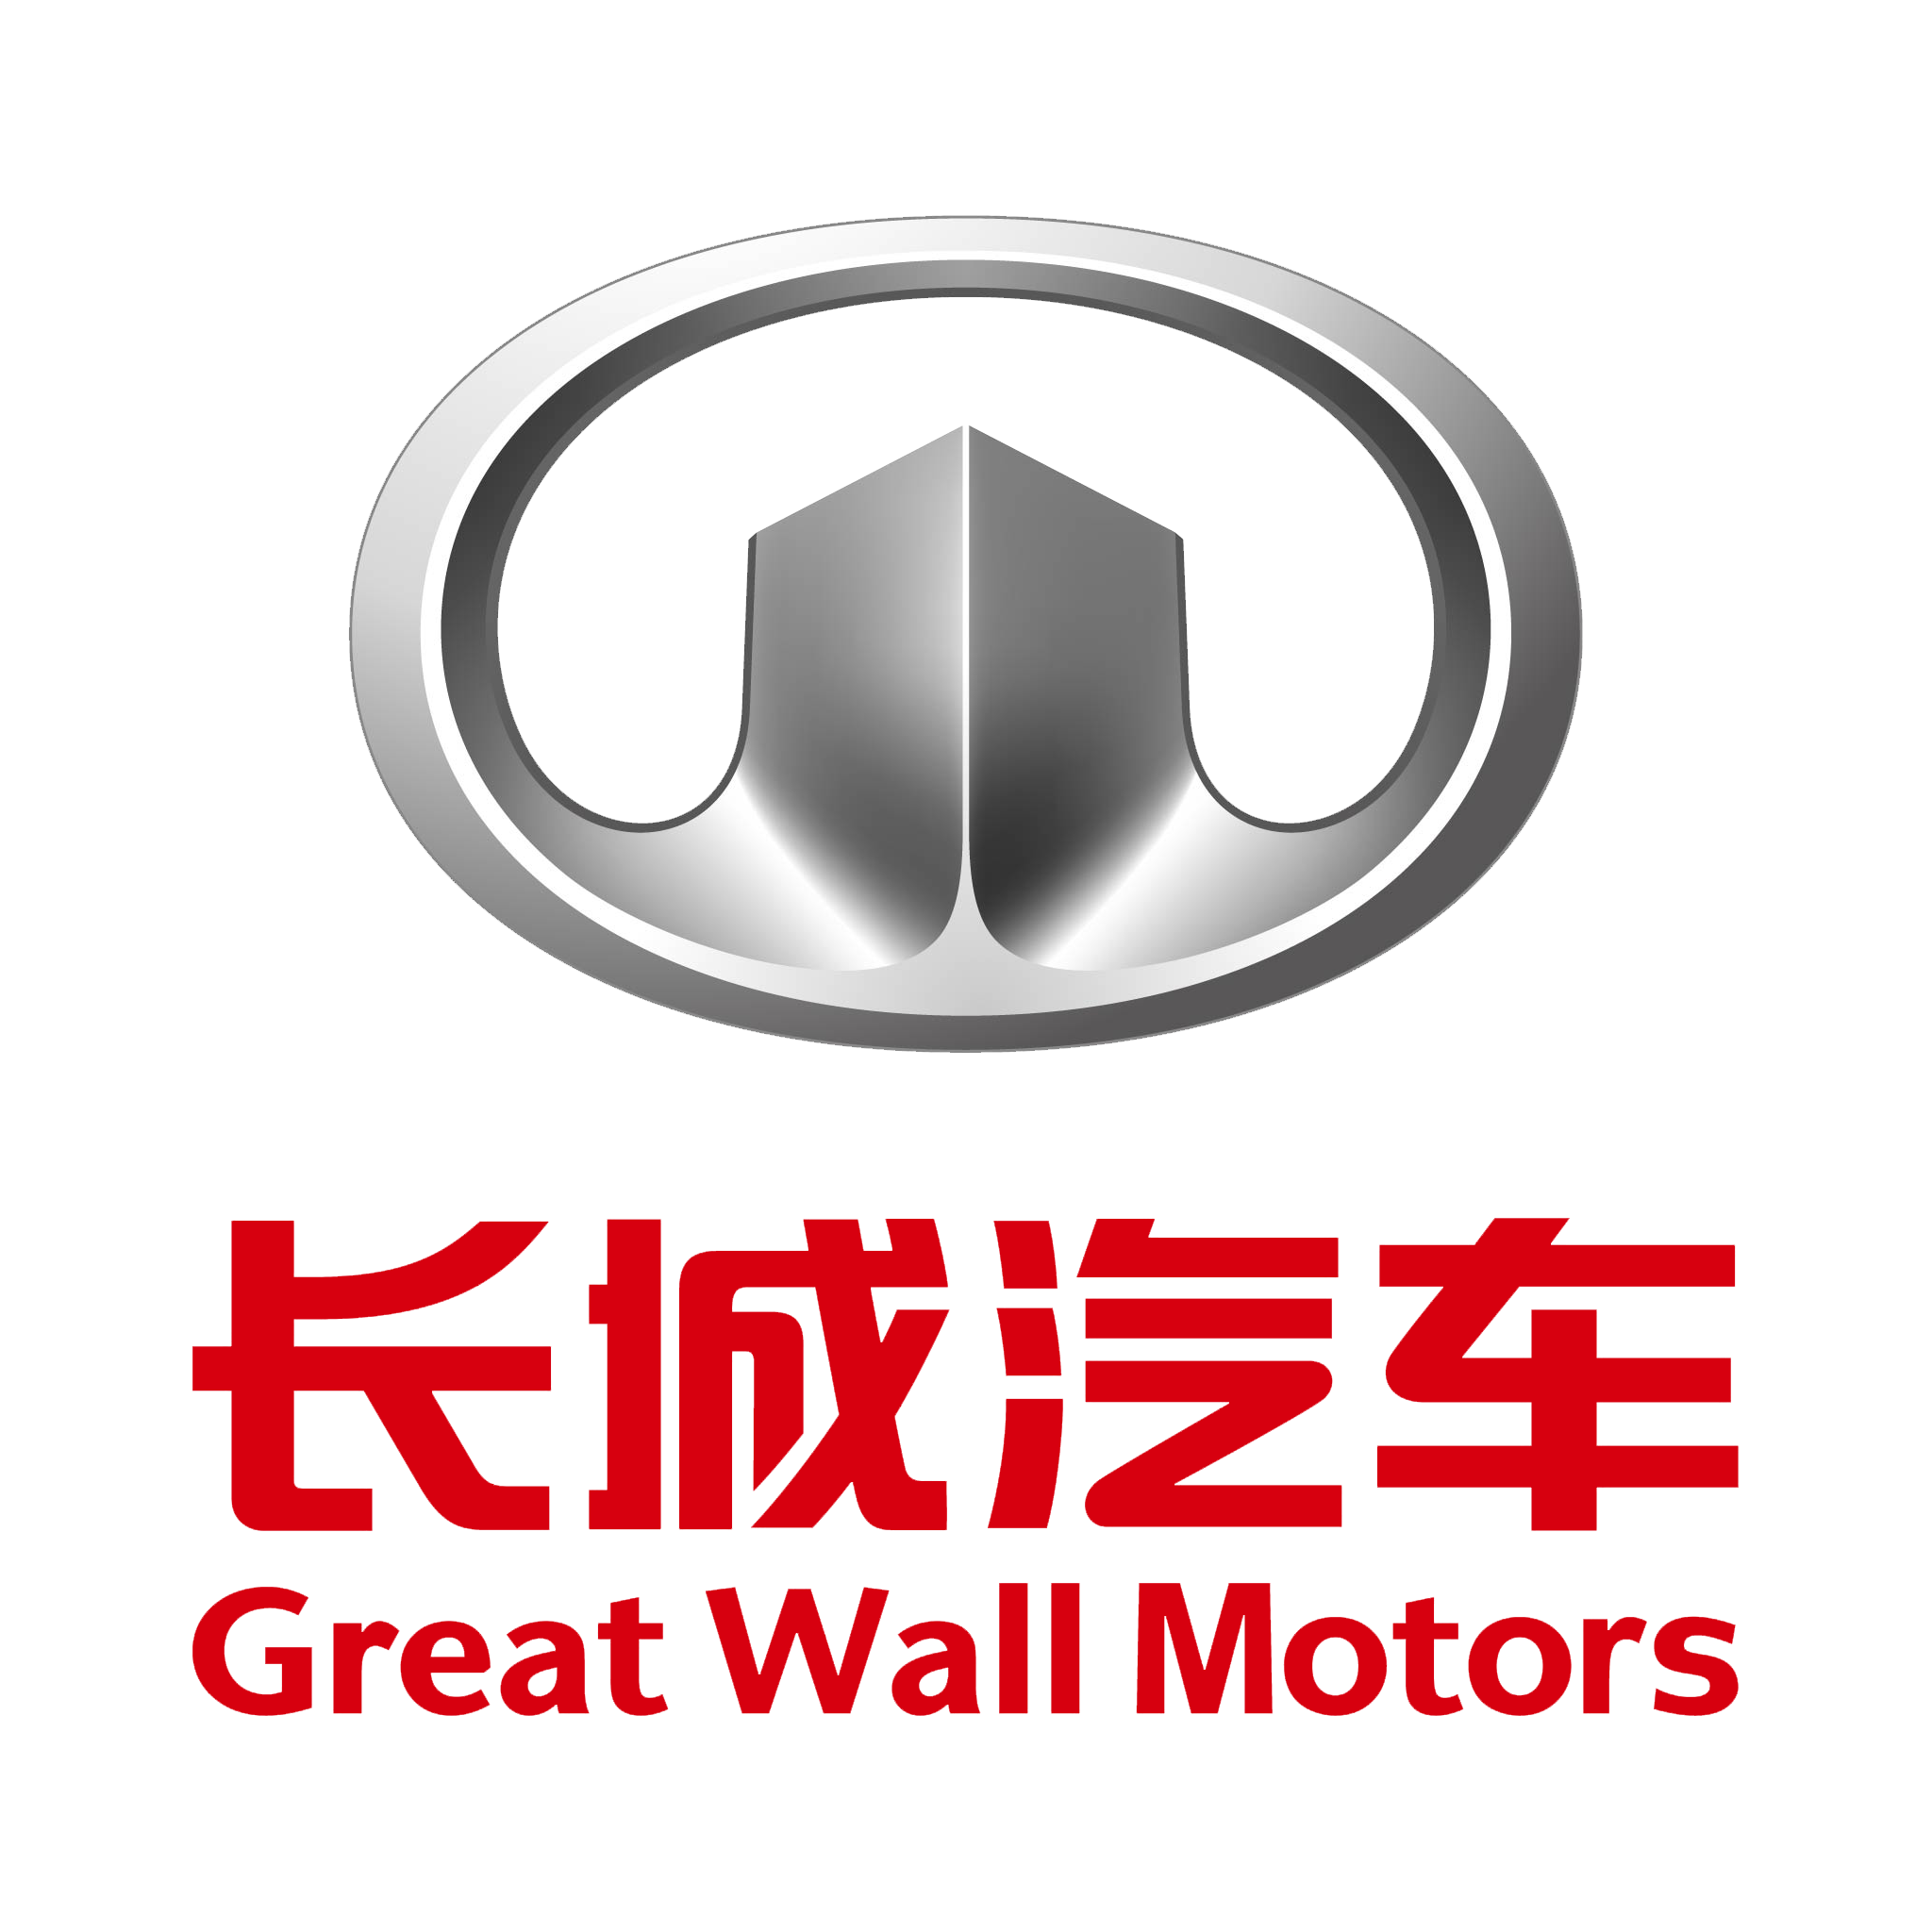 Значки китайских автомобилей. Эмблема Грейт вол. Great Wall Motors logo. Логотип Грейт вол Ховер. Great Wall Motor концерн.